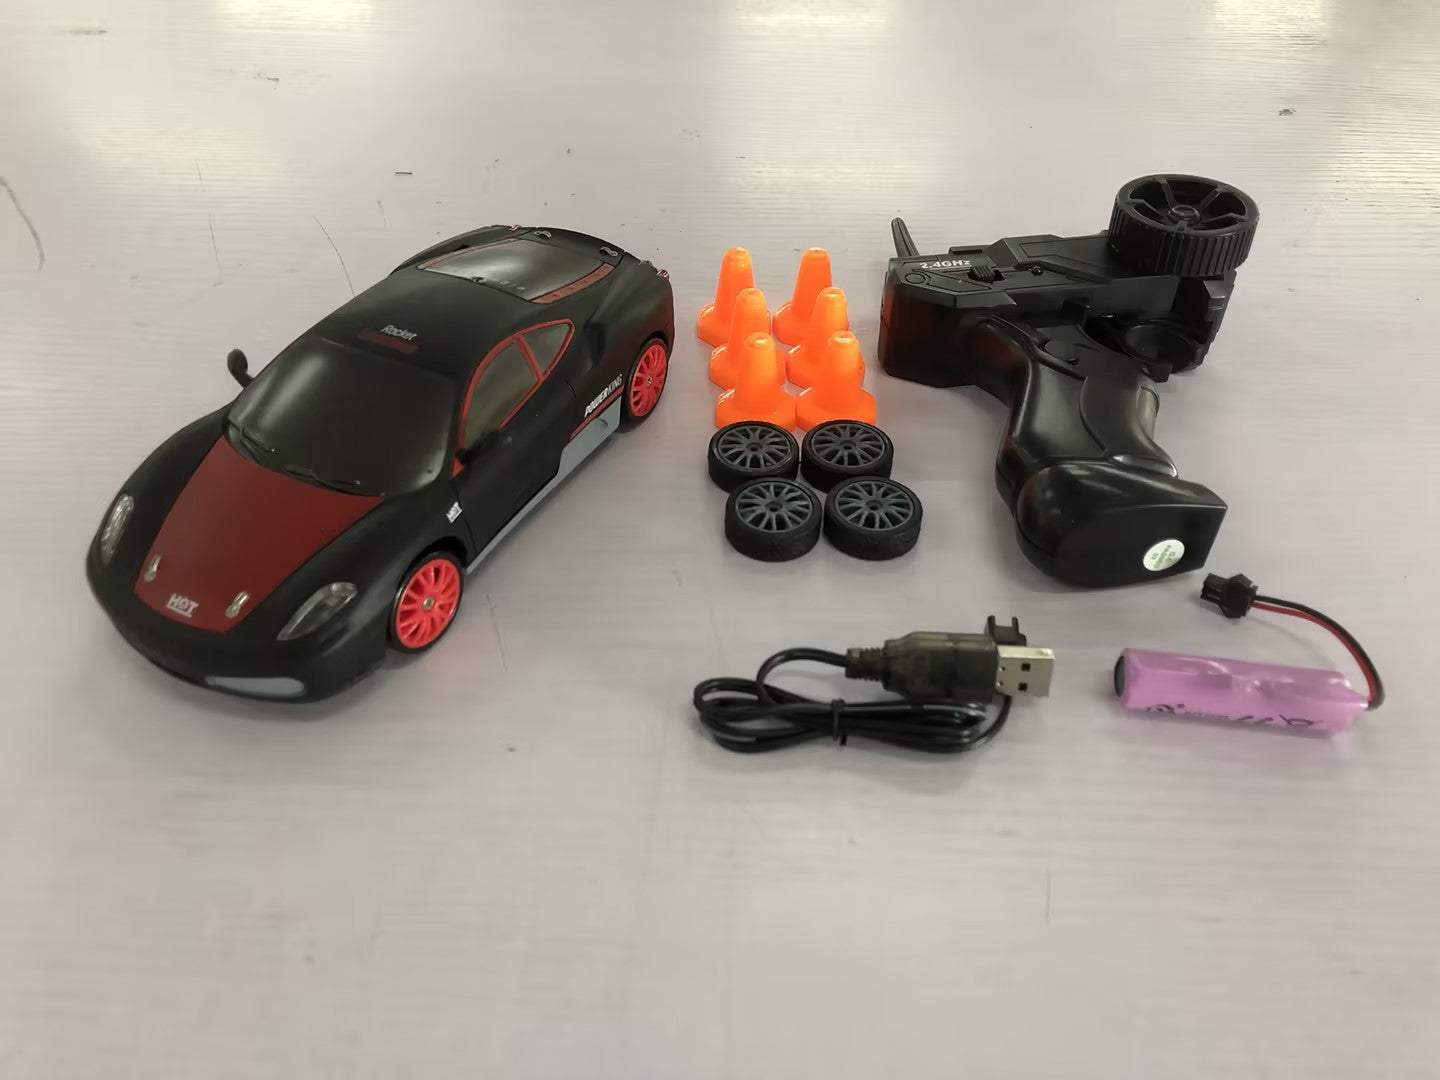 High-Speed 2.4G Remote Control Drift Racing Car Toy for Children - GTR Model AE86 Vehicle Toyland EU Toyland EU